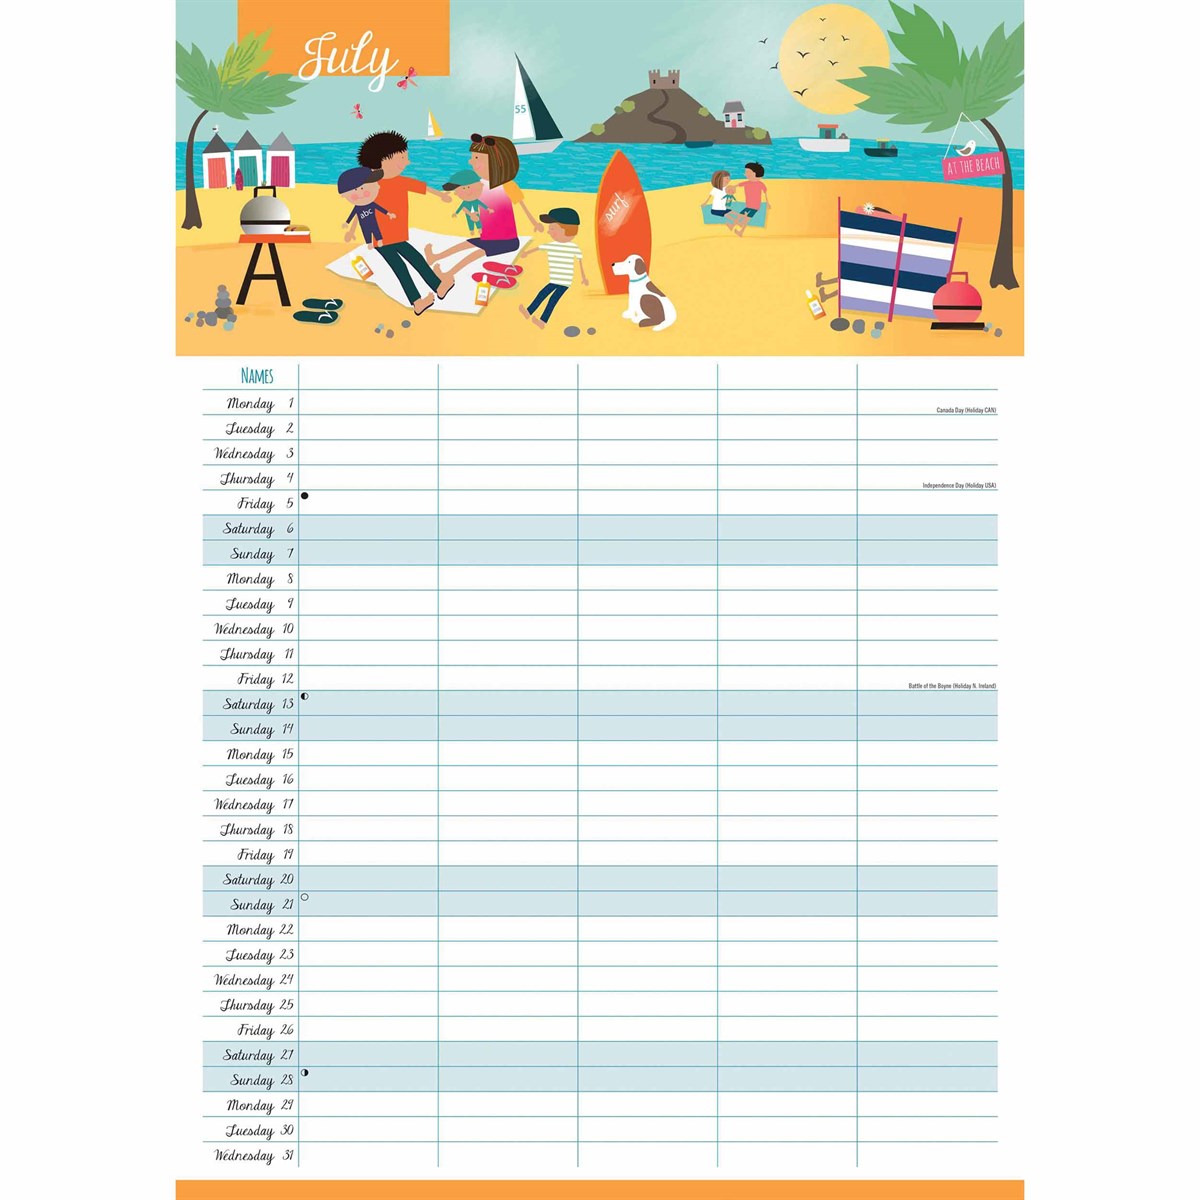 2024 Family Organiser Calendar A3 Wall Calendar/space for 4 Family